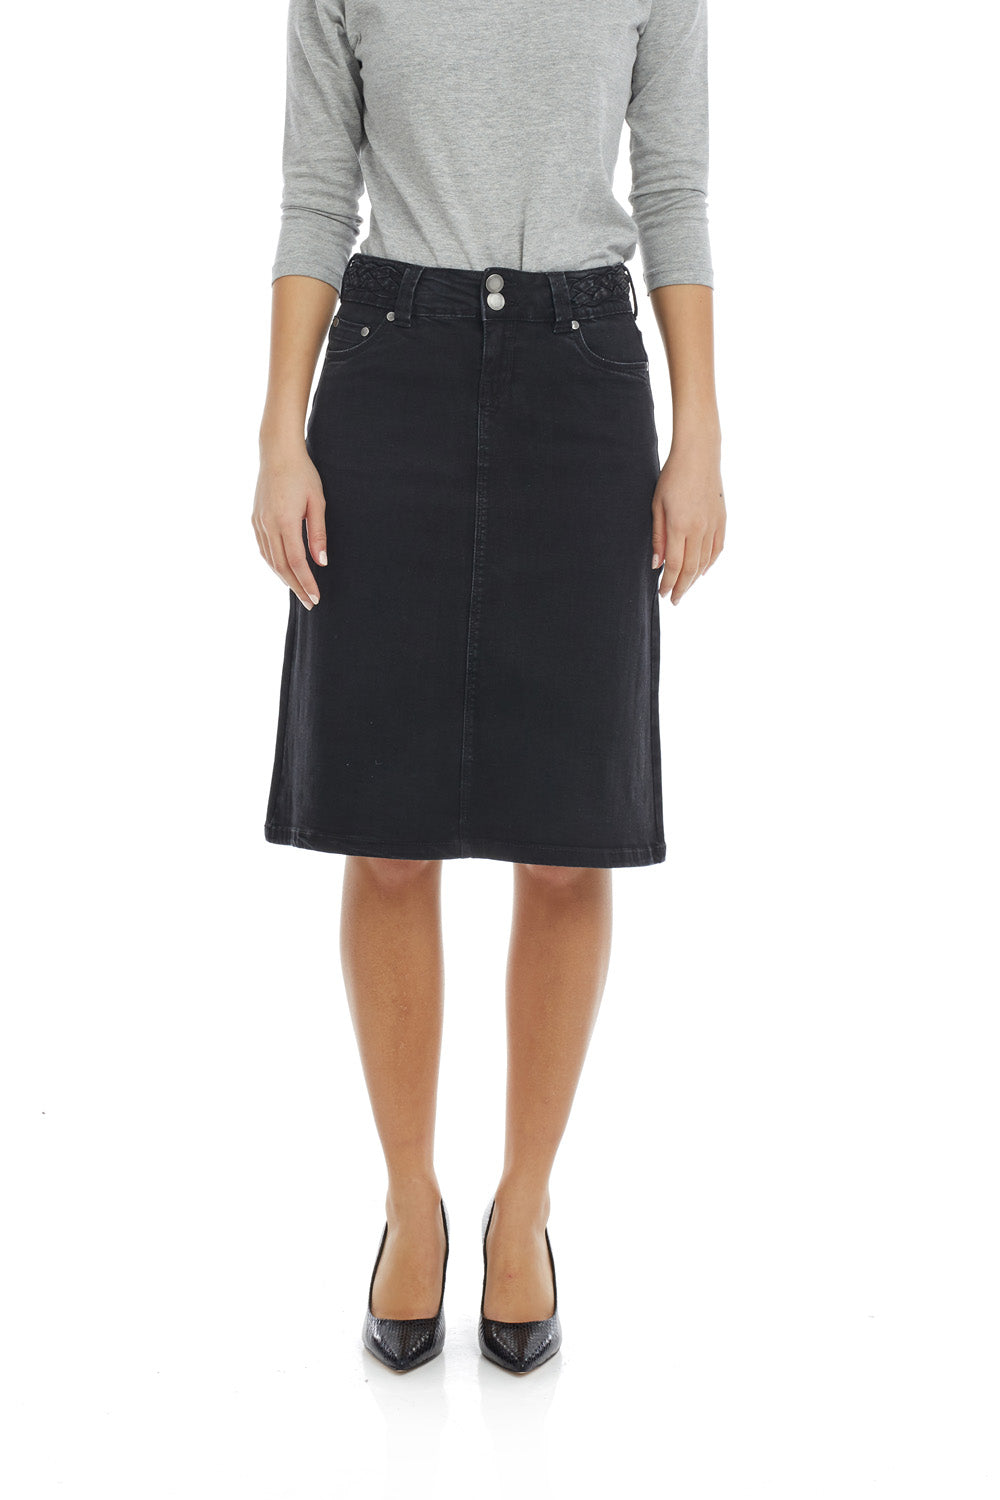 Esteez SYDNEY Denim Skirt - Modest Below the Knee A-line Jean Skirt for Women - BLACK